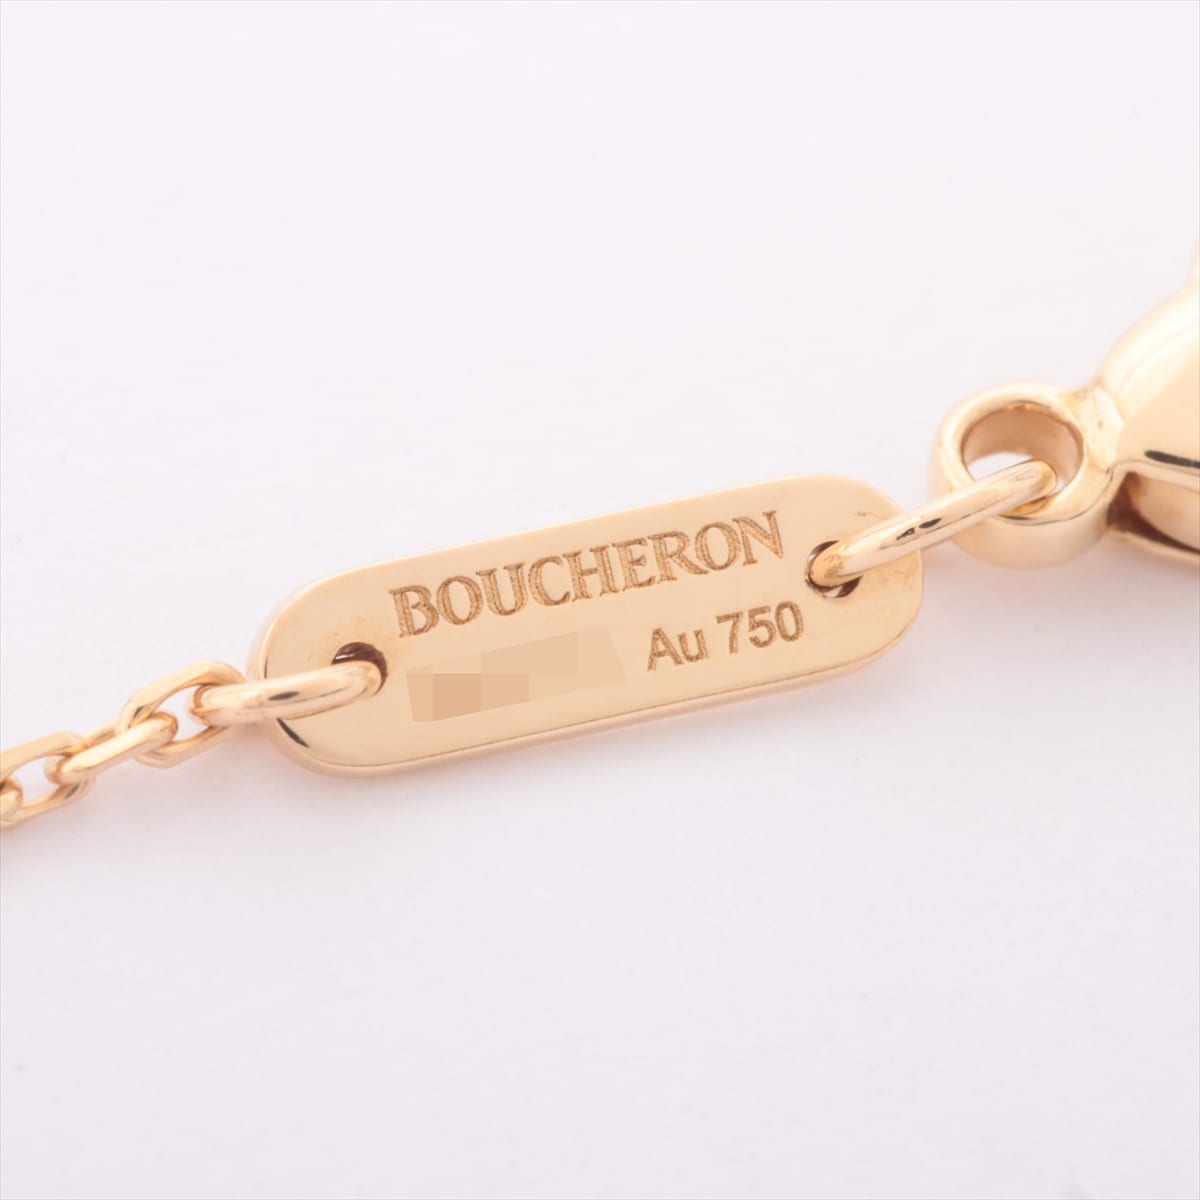 Boucheron Quatre Classic diamond Necklace 750(YG×PG×WG) 4.5g extra small